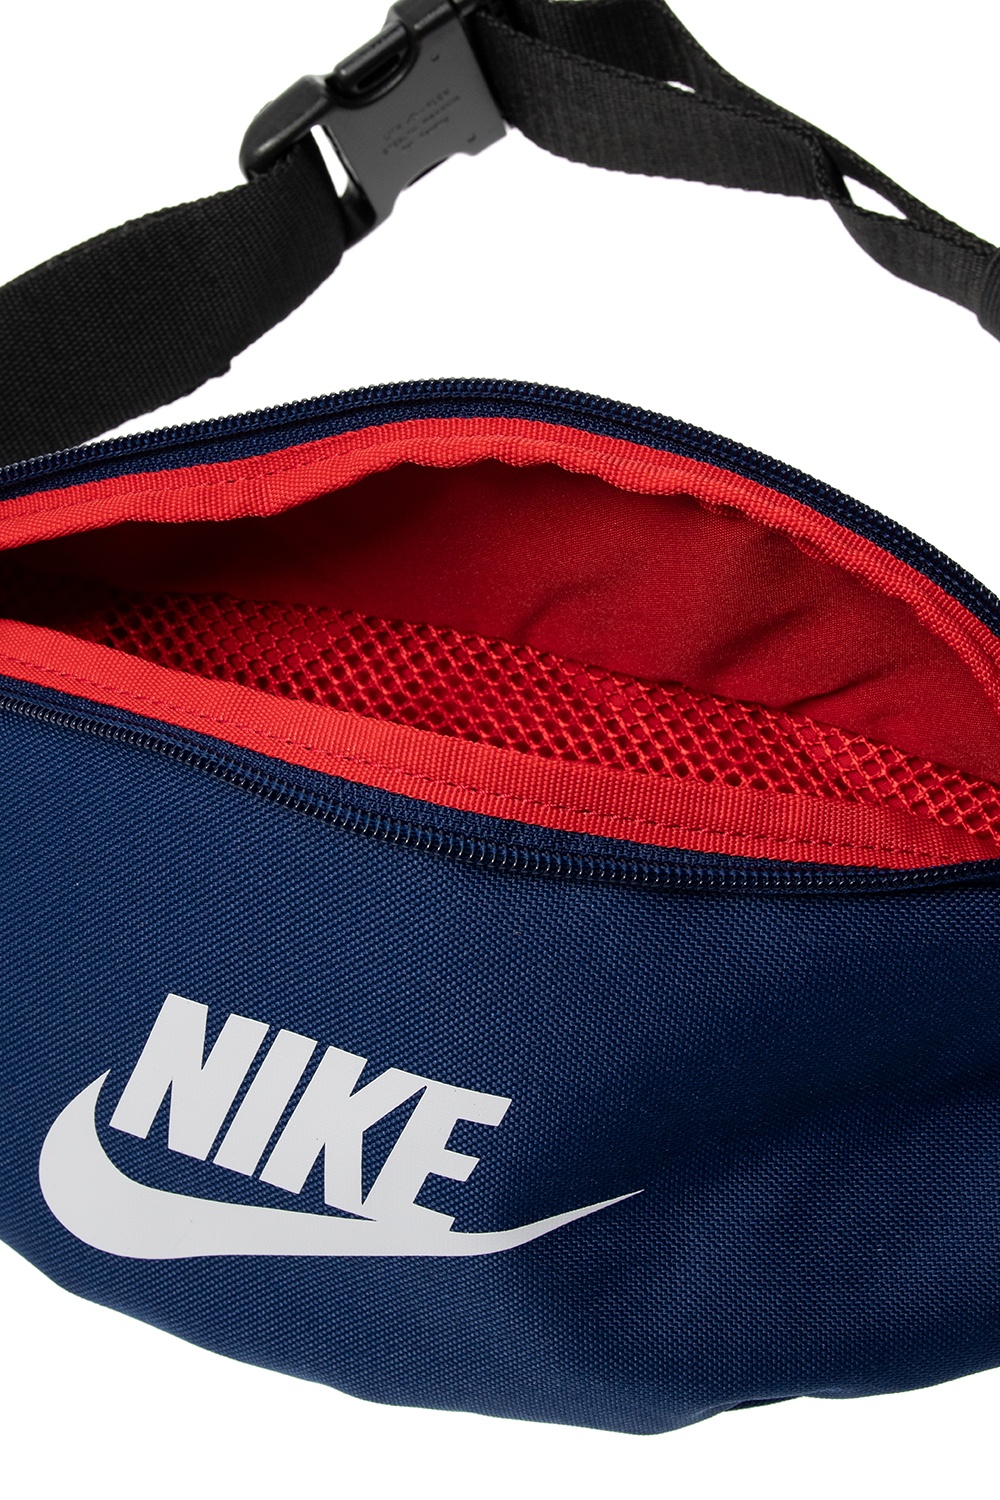 pereza como eso origen Branded belt bag Nike - nike sb cat scratch black and blue shoes -  IetpShops Guatemala